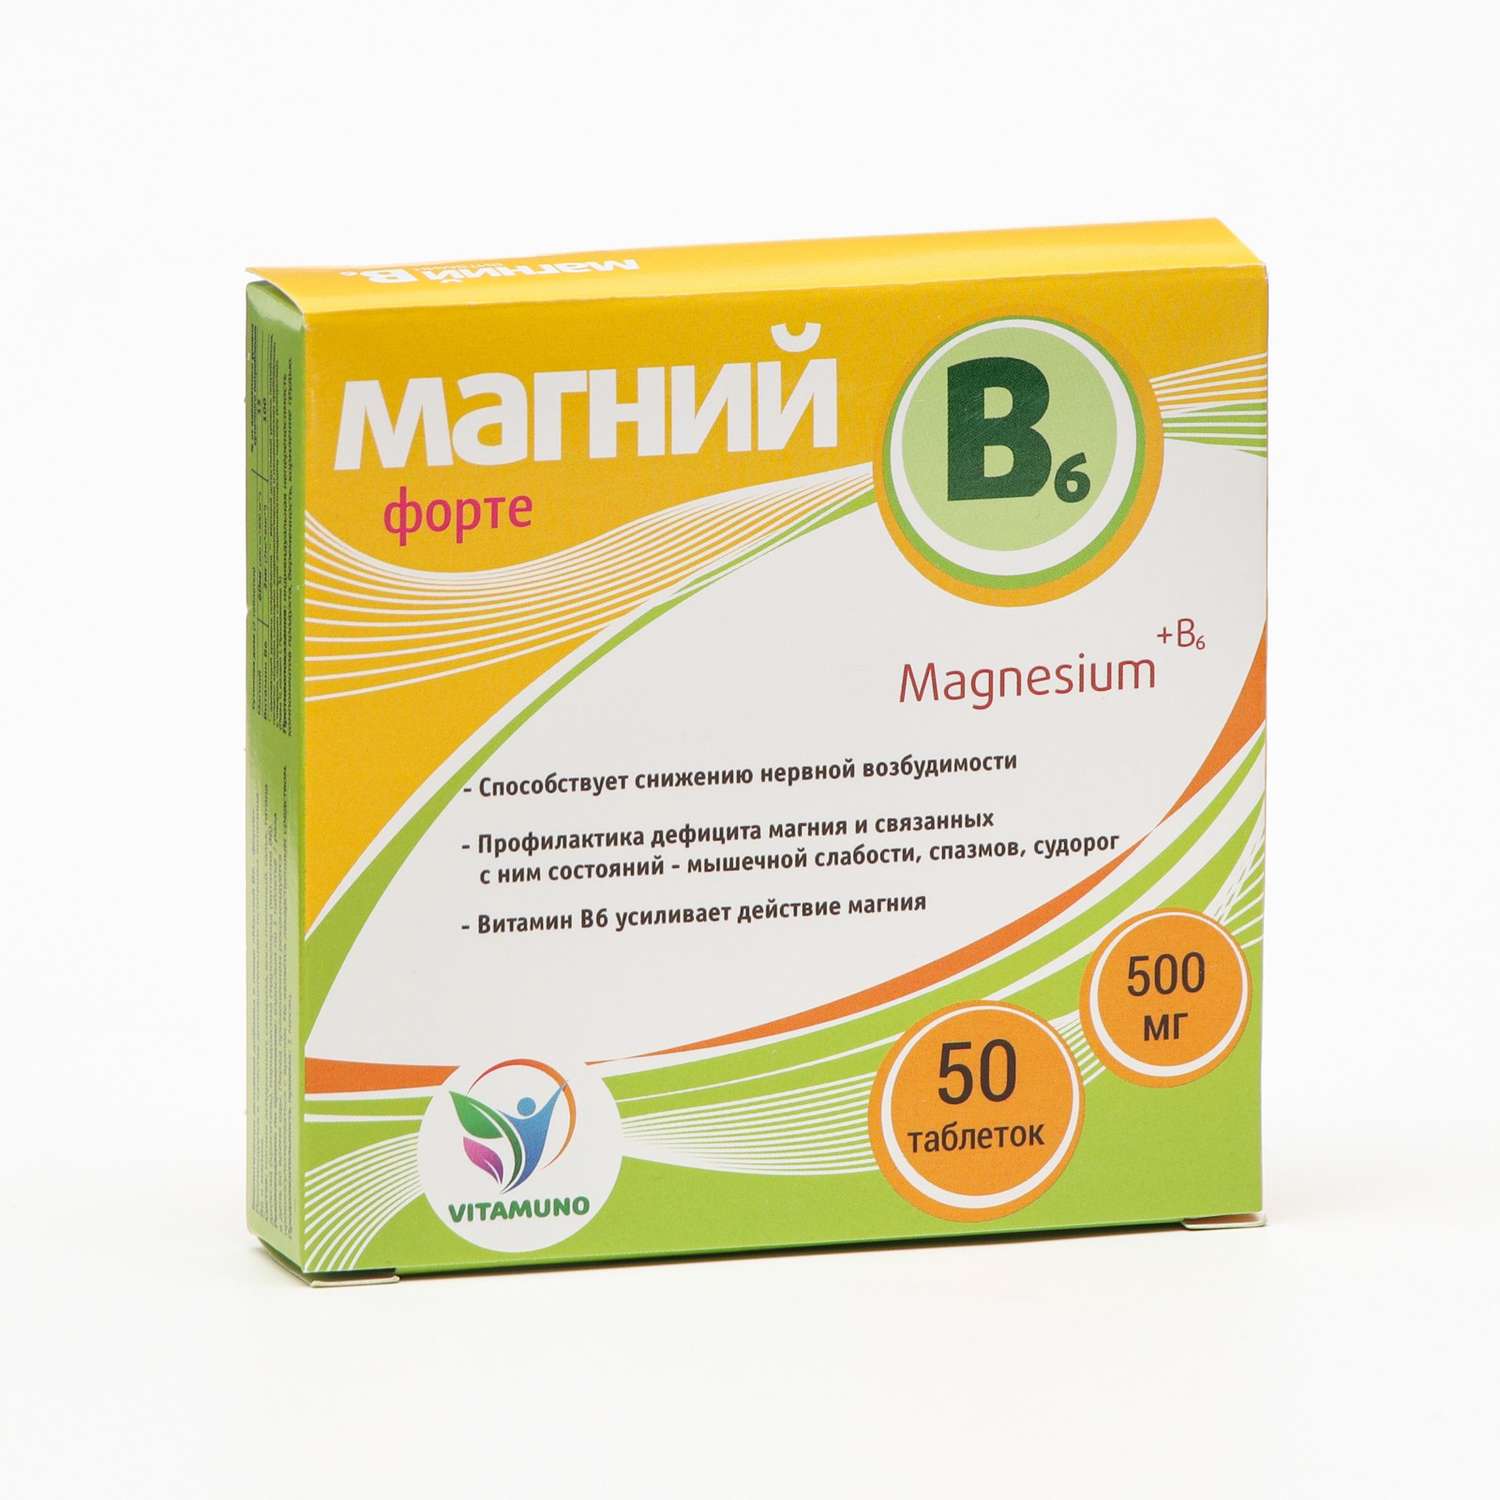 Набор витаминов Vitamuno Магний B6-форте для взрослых 50 таблеток по 500 мг - фото 2